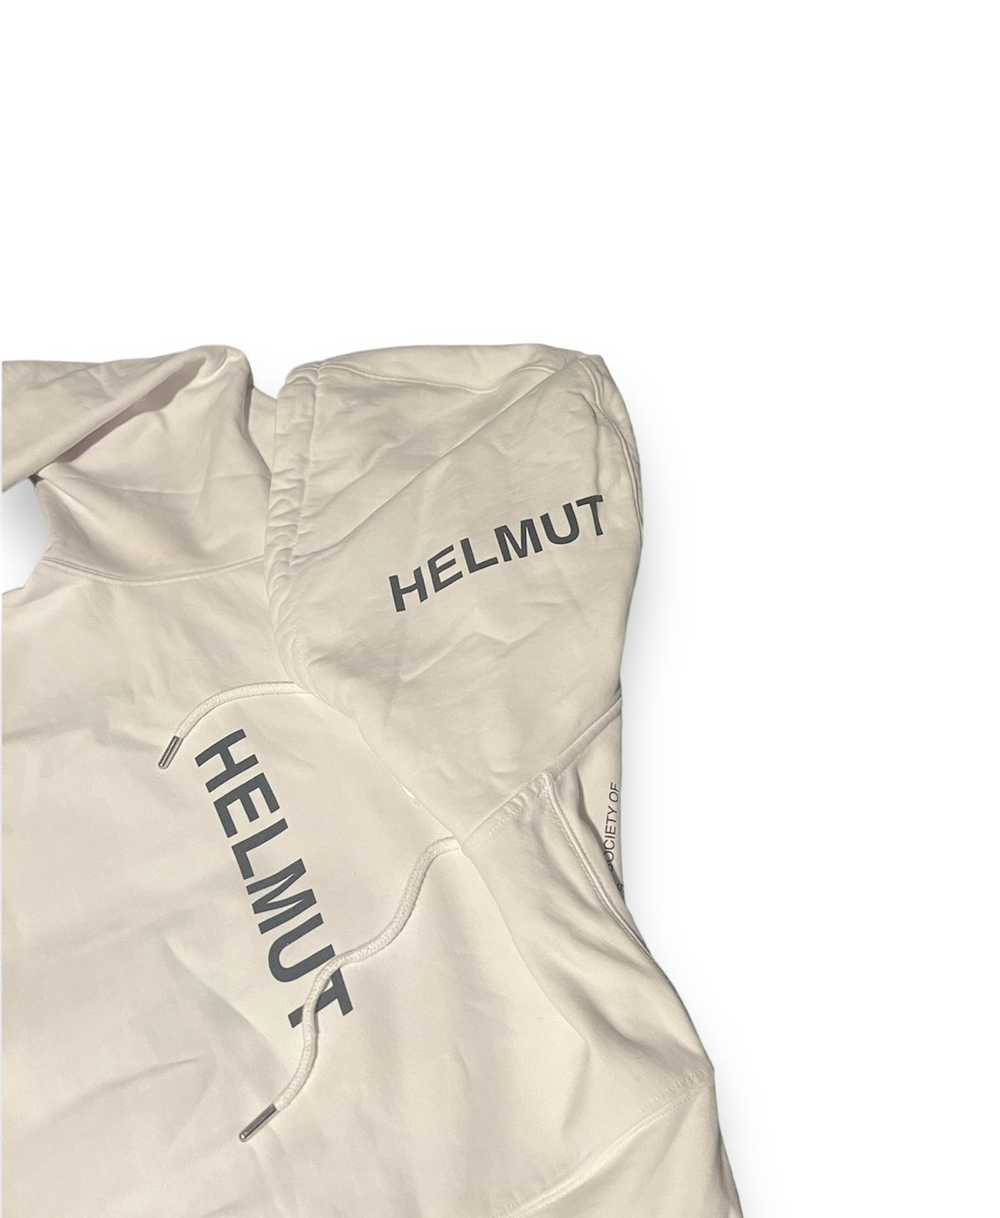 Helmut Lang Helmut Lang White Box Hoodie - image 3